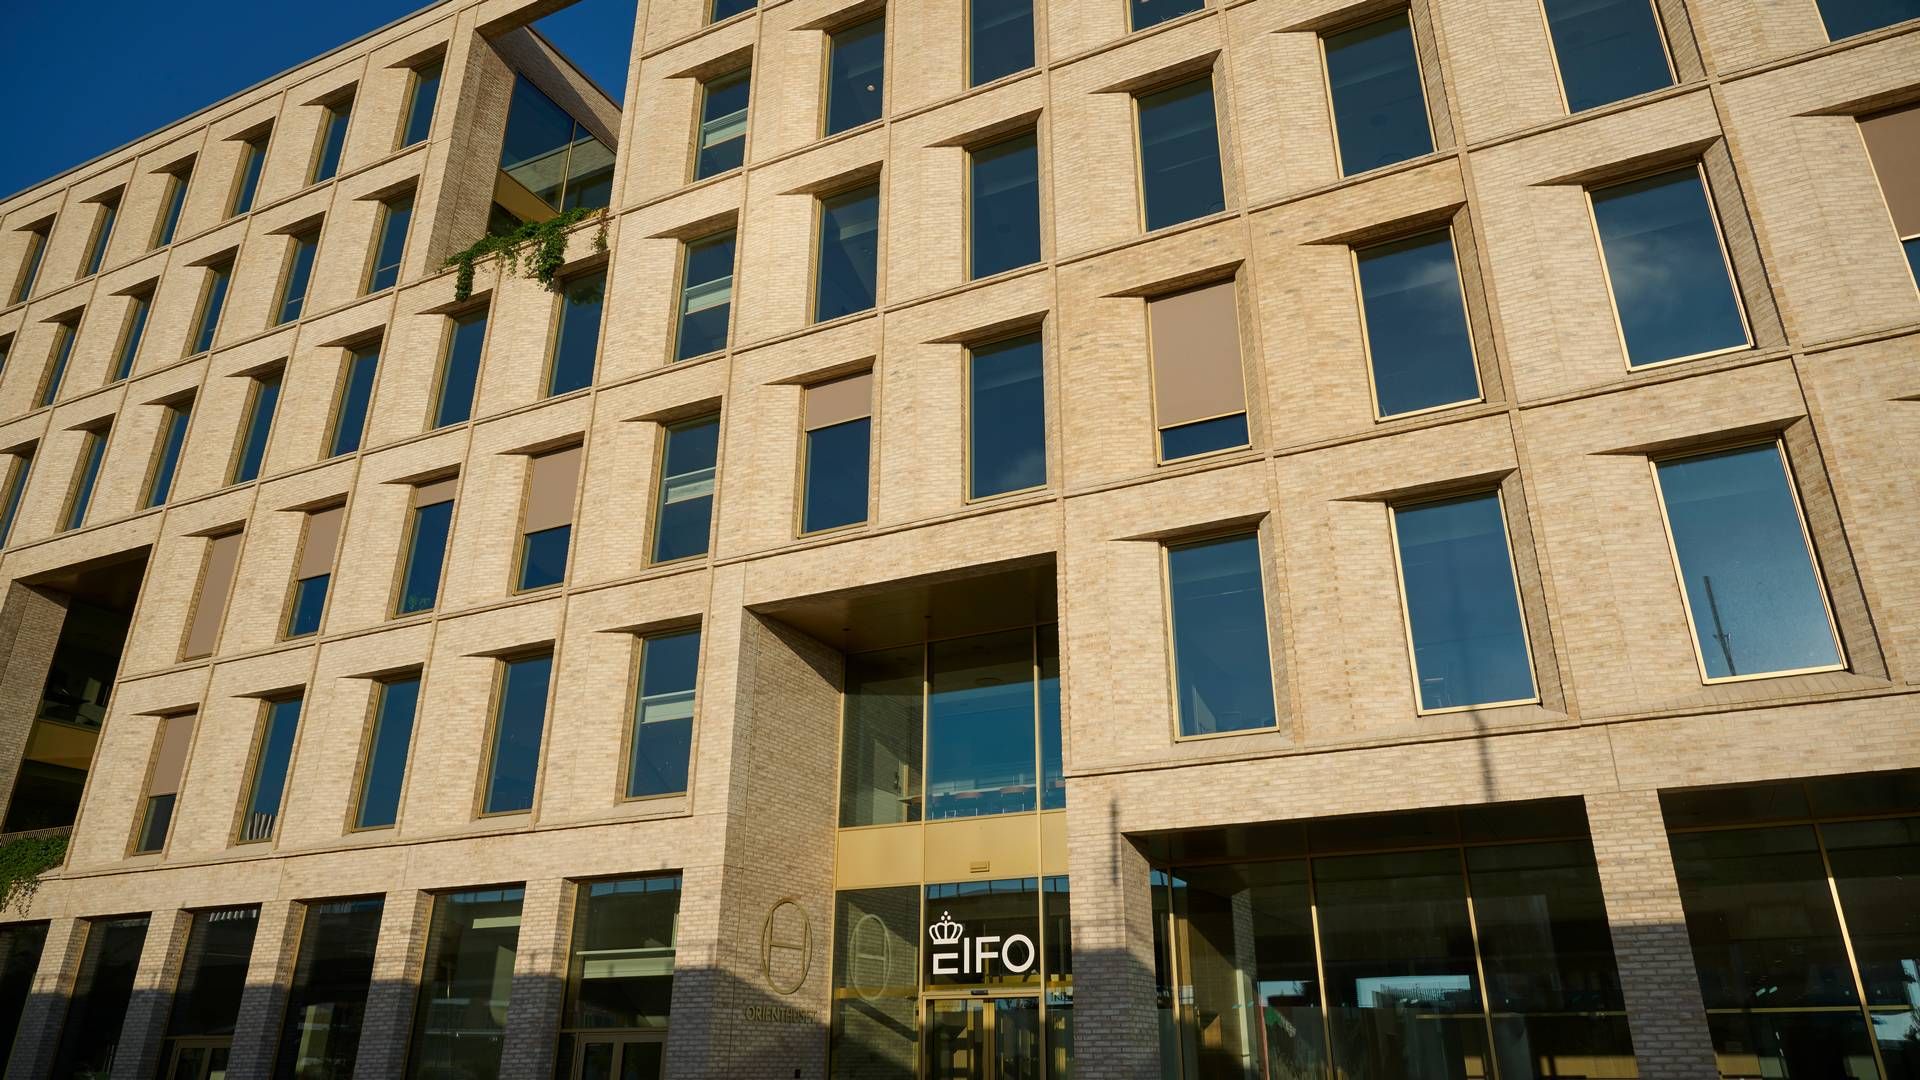 Eifo was established in 2023 with the merger of Vækstfonden, Danmarks Grønne Investeringsfond and EKF Danmarks Eksportkredit. | Photo: Eifo / PR